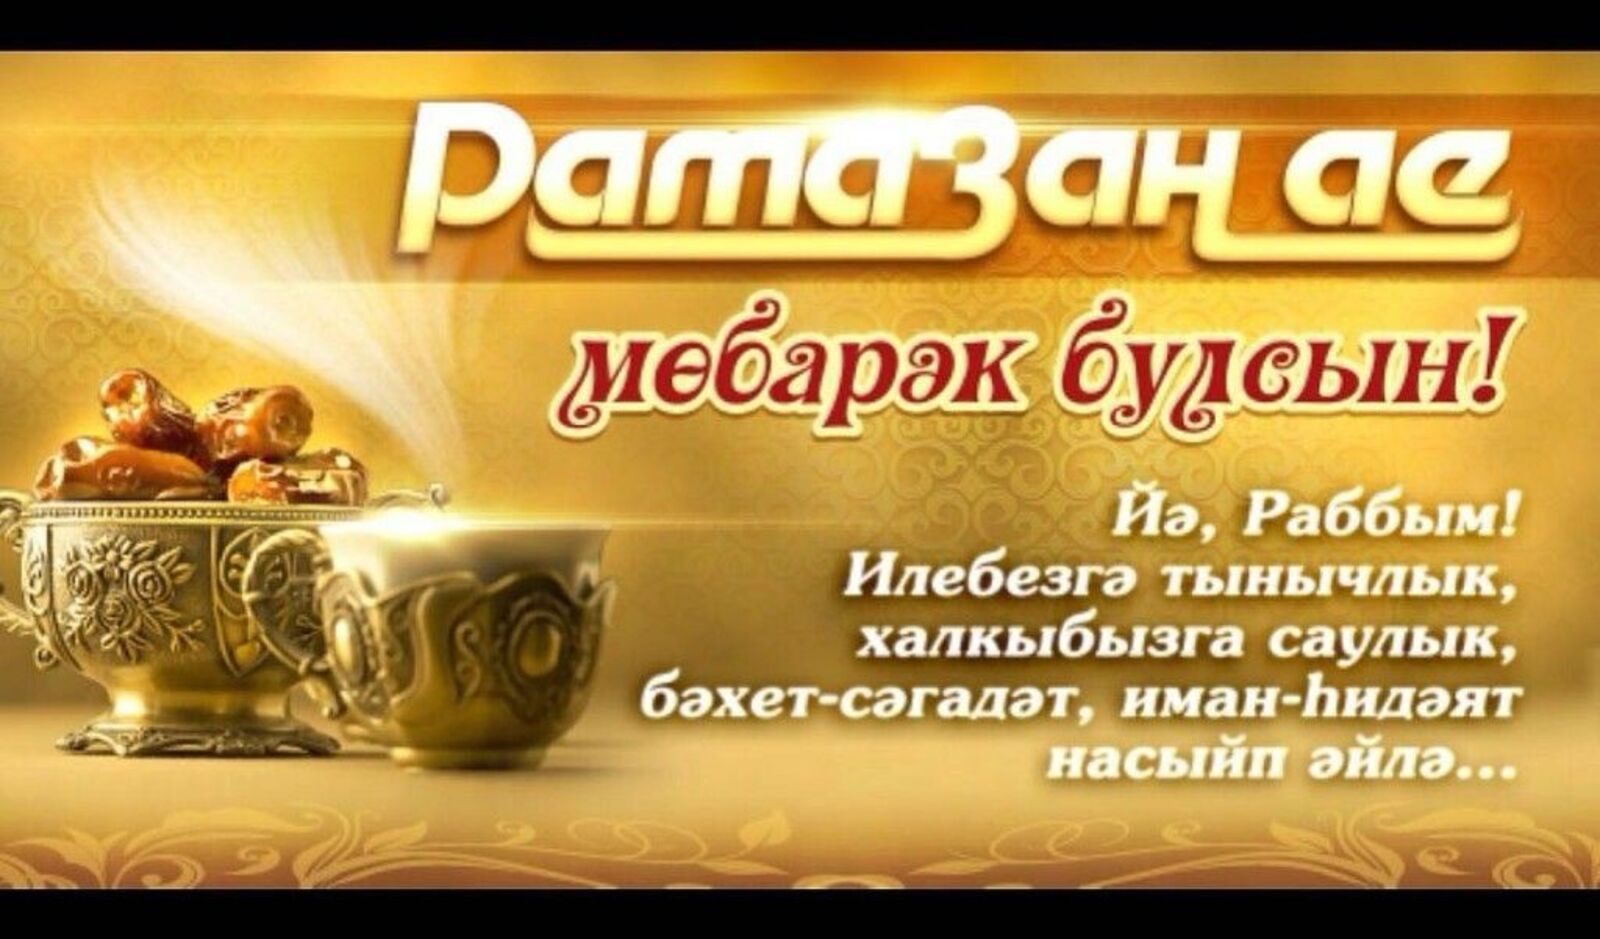 alki-rt.ru Рамазан дәресләре